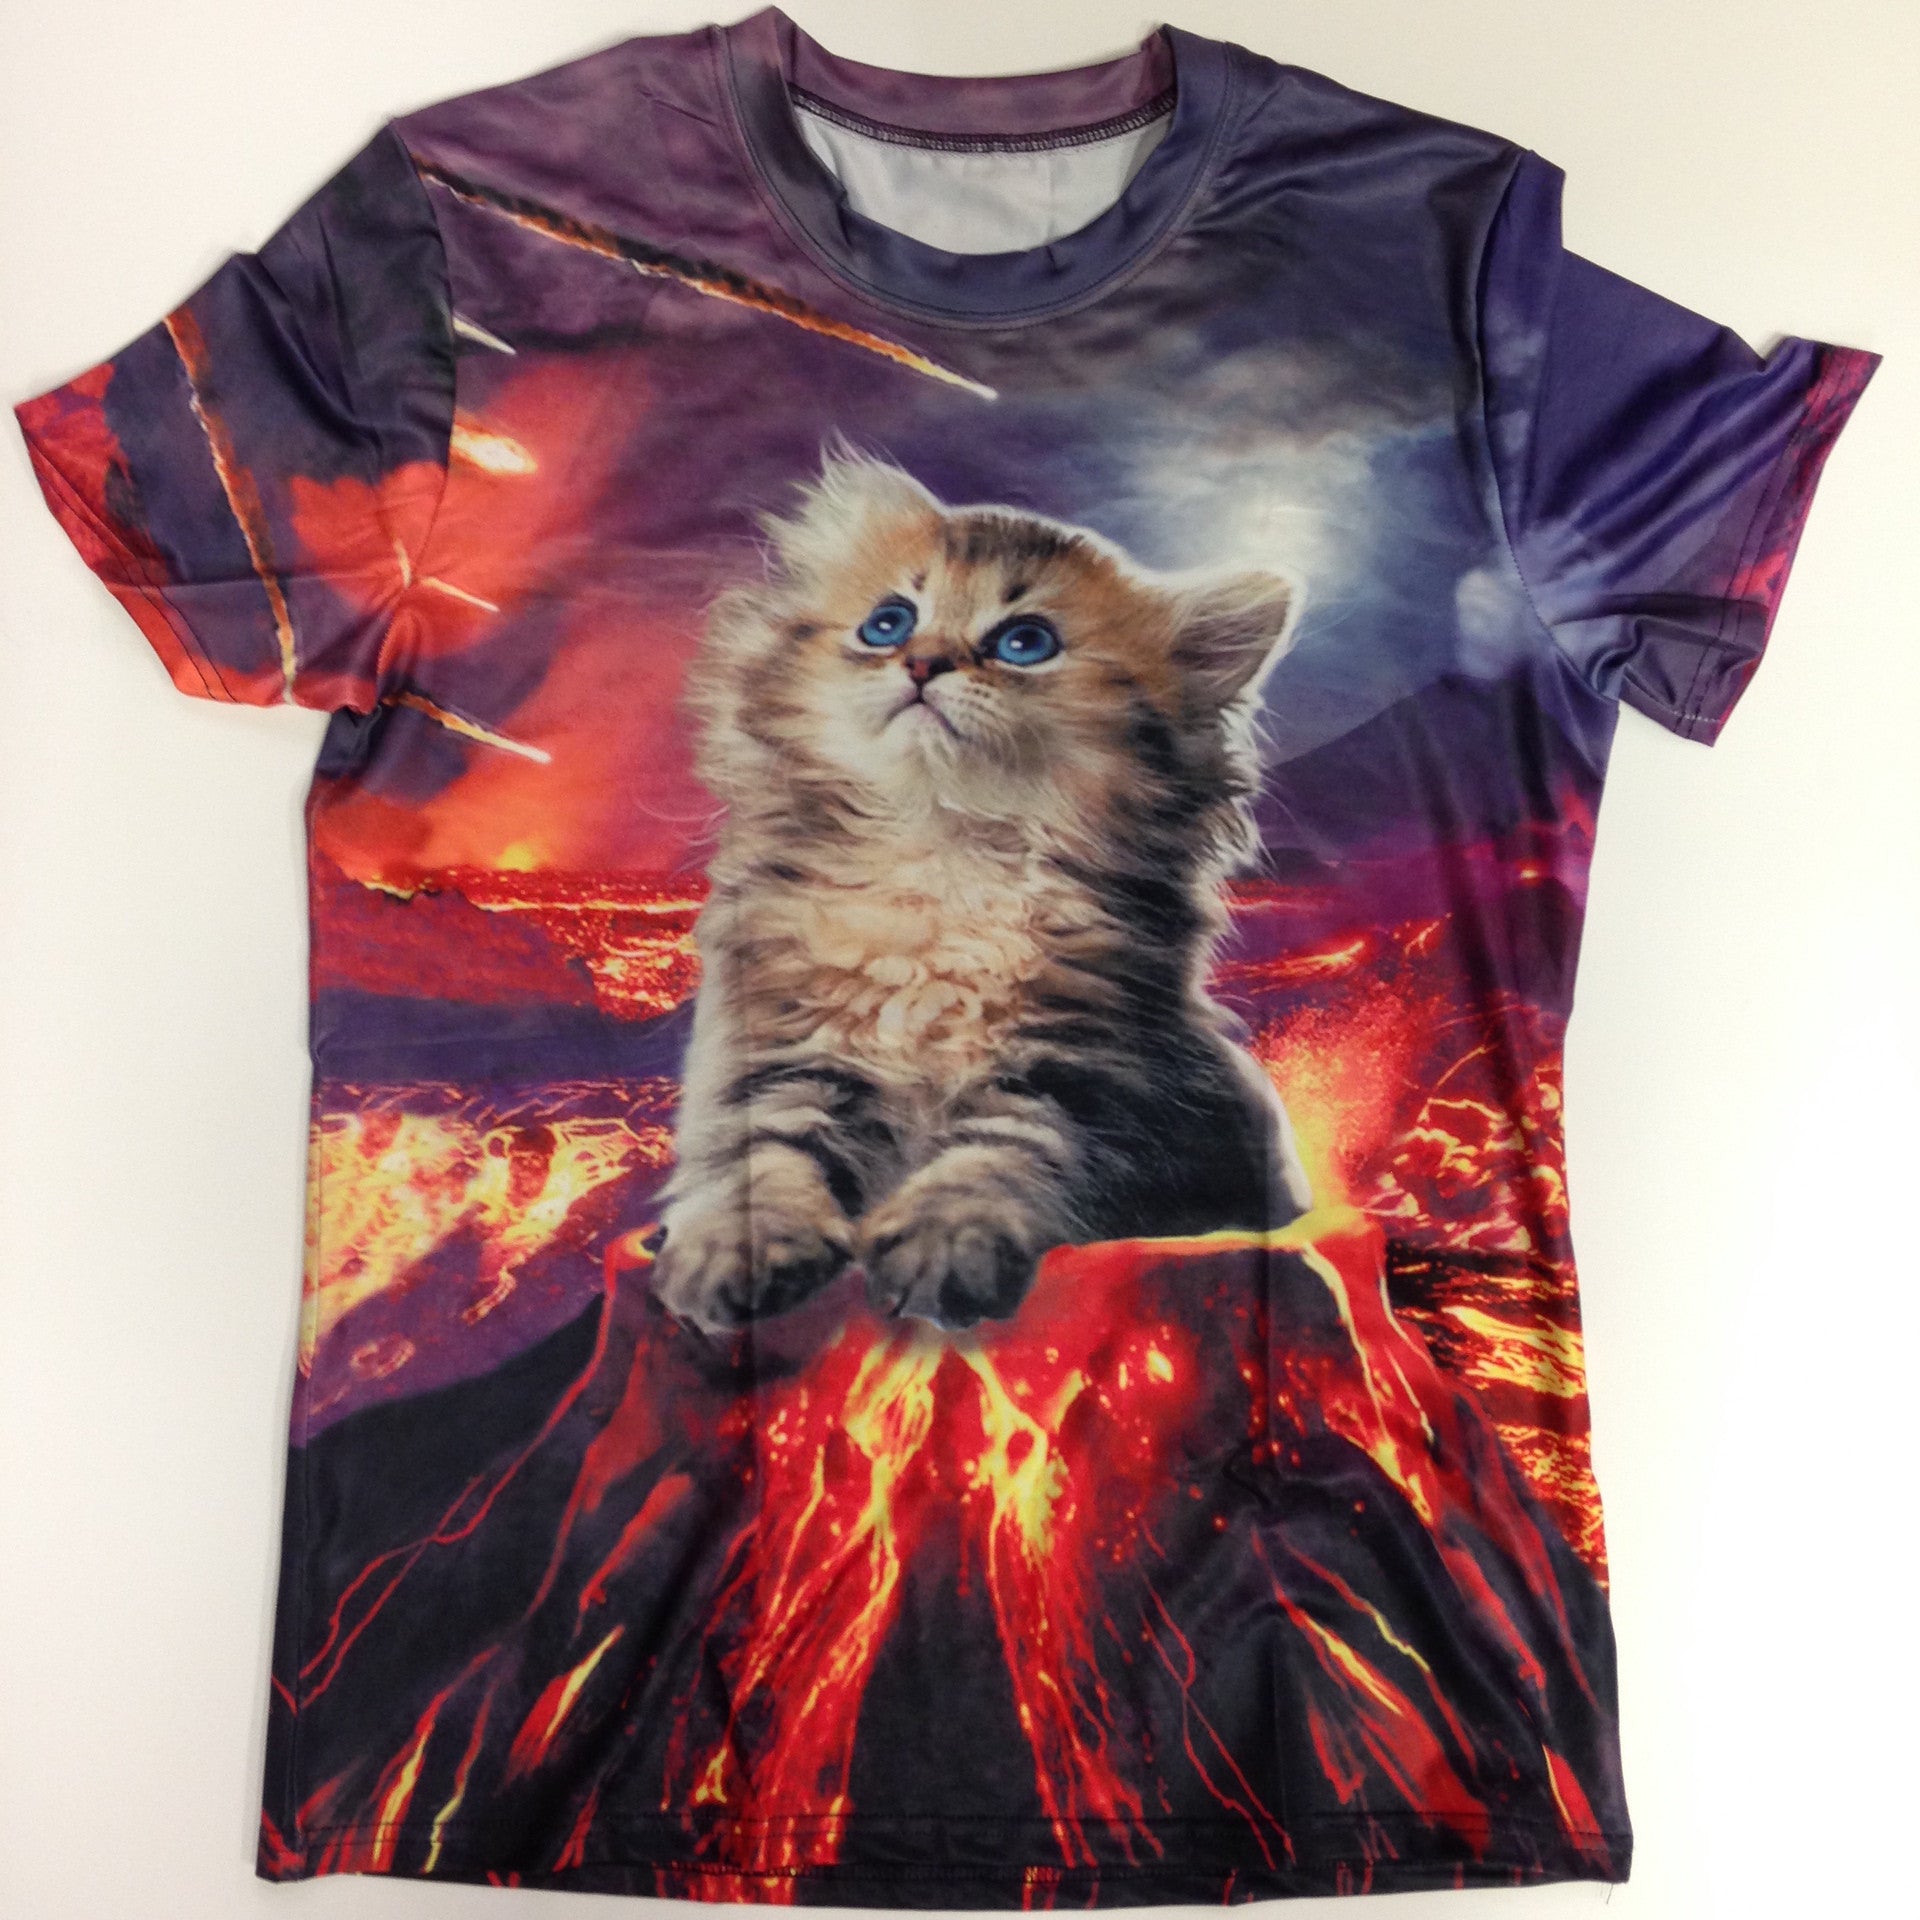 Cat in Volcano Lava - 88% Polyester / 12% Spandex Blend